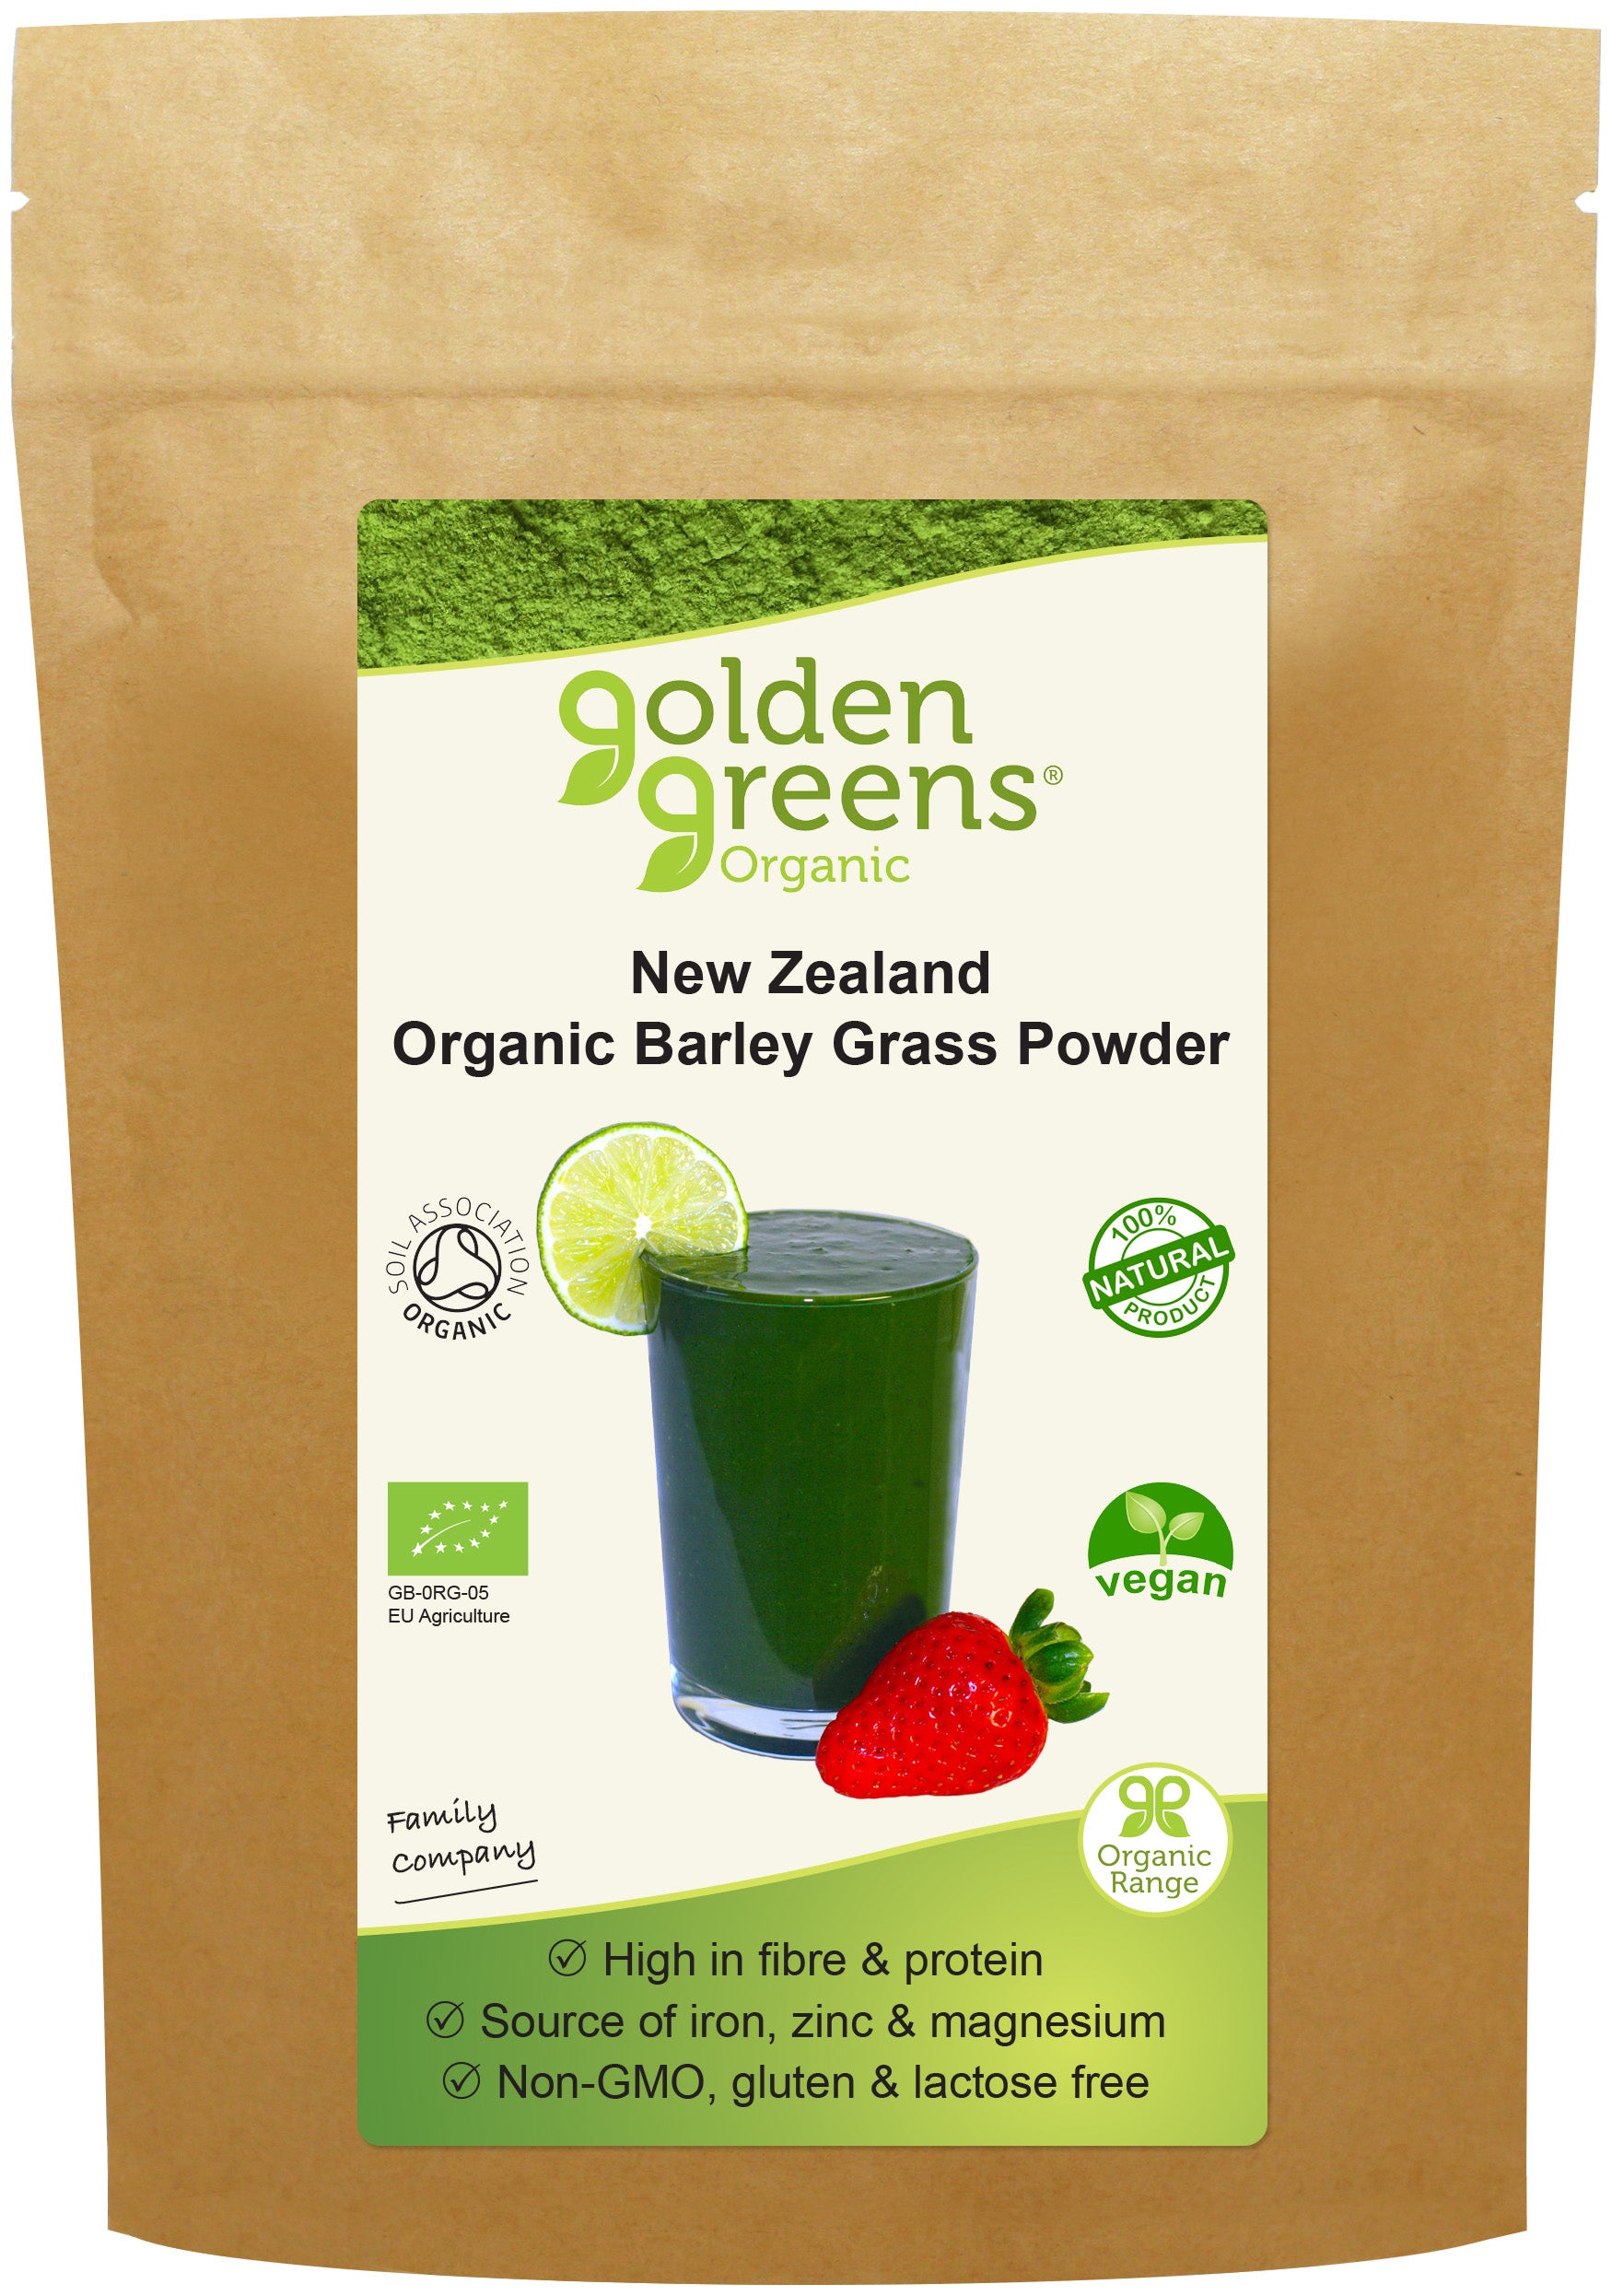 Golden Greens (Greens Organic) New Zealand Organic Barley Grass Powder